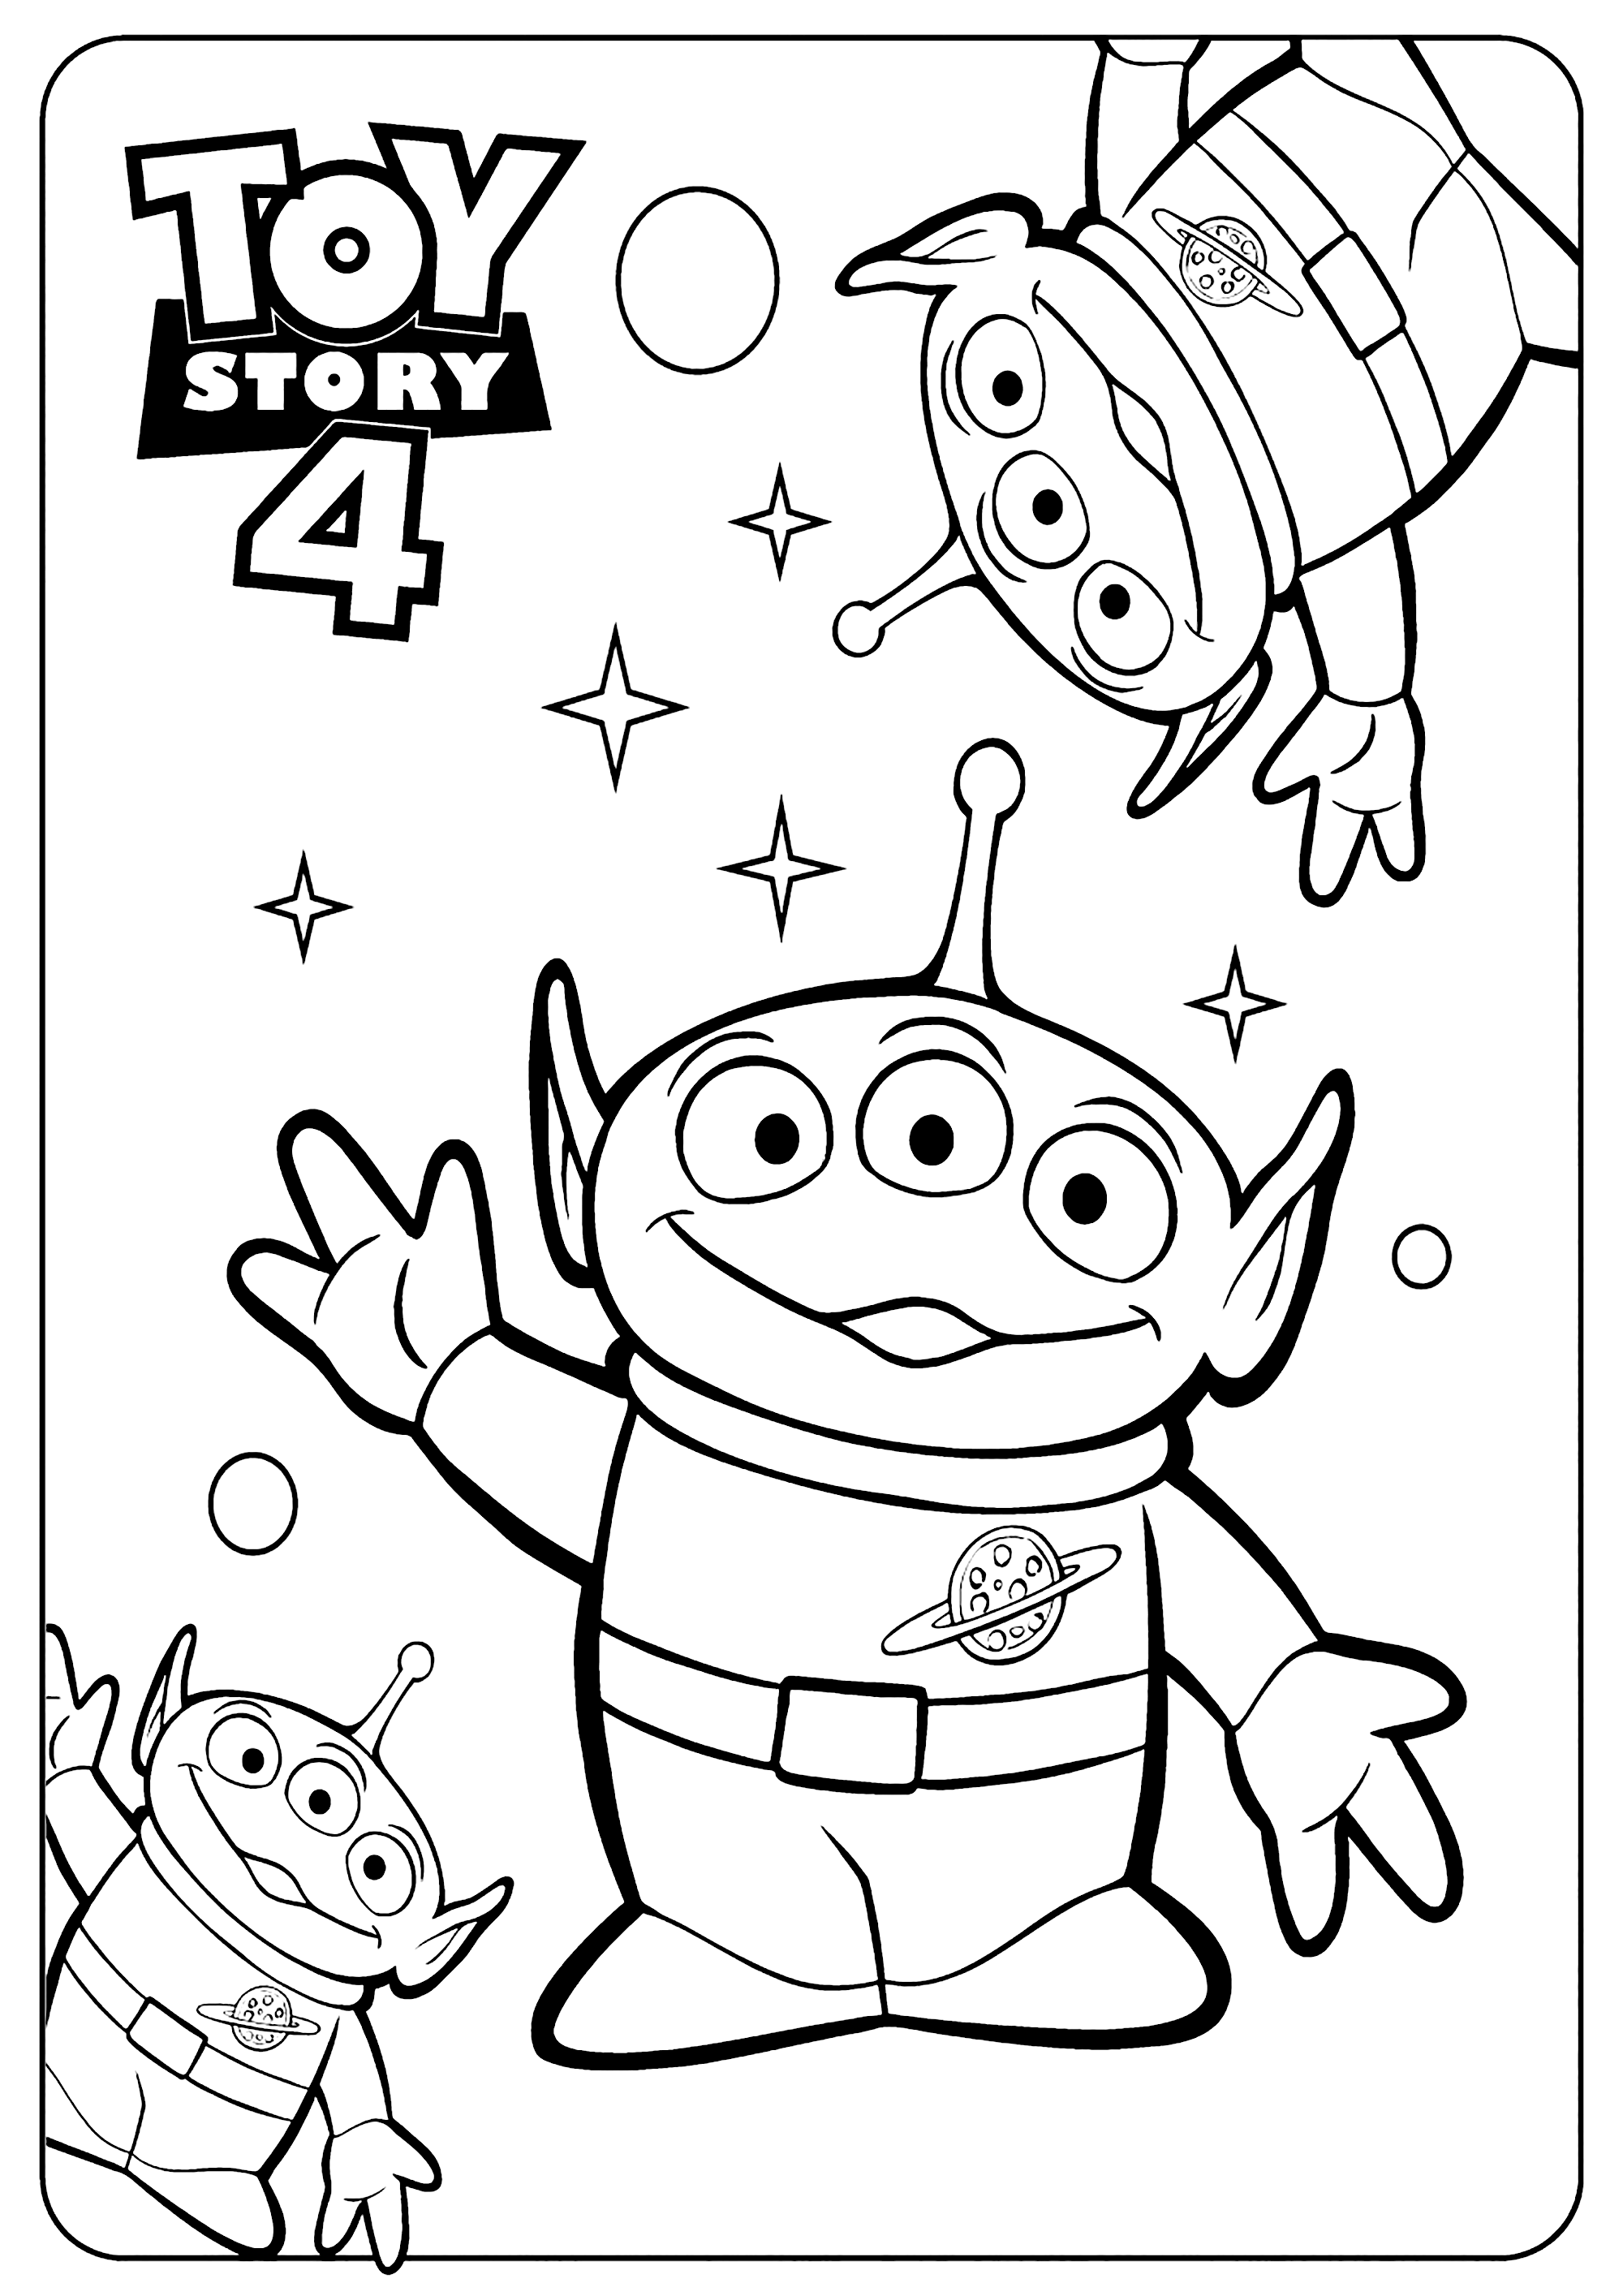 Beautiful Toy Story 4: Páginas de coloração alienígena